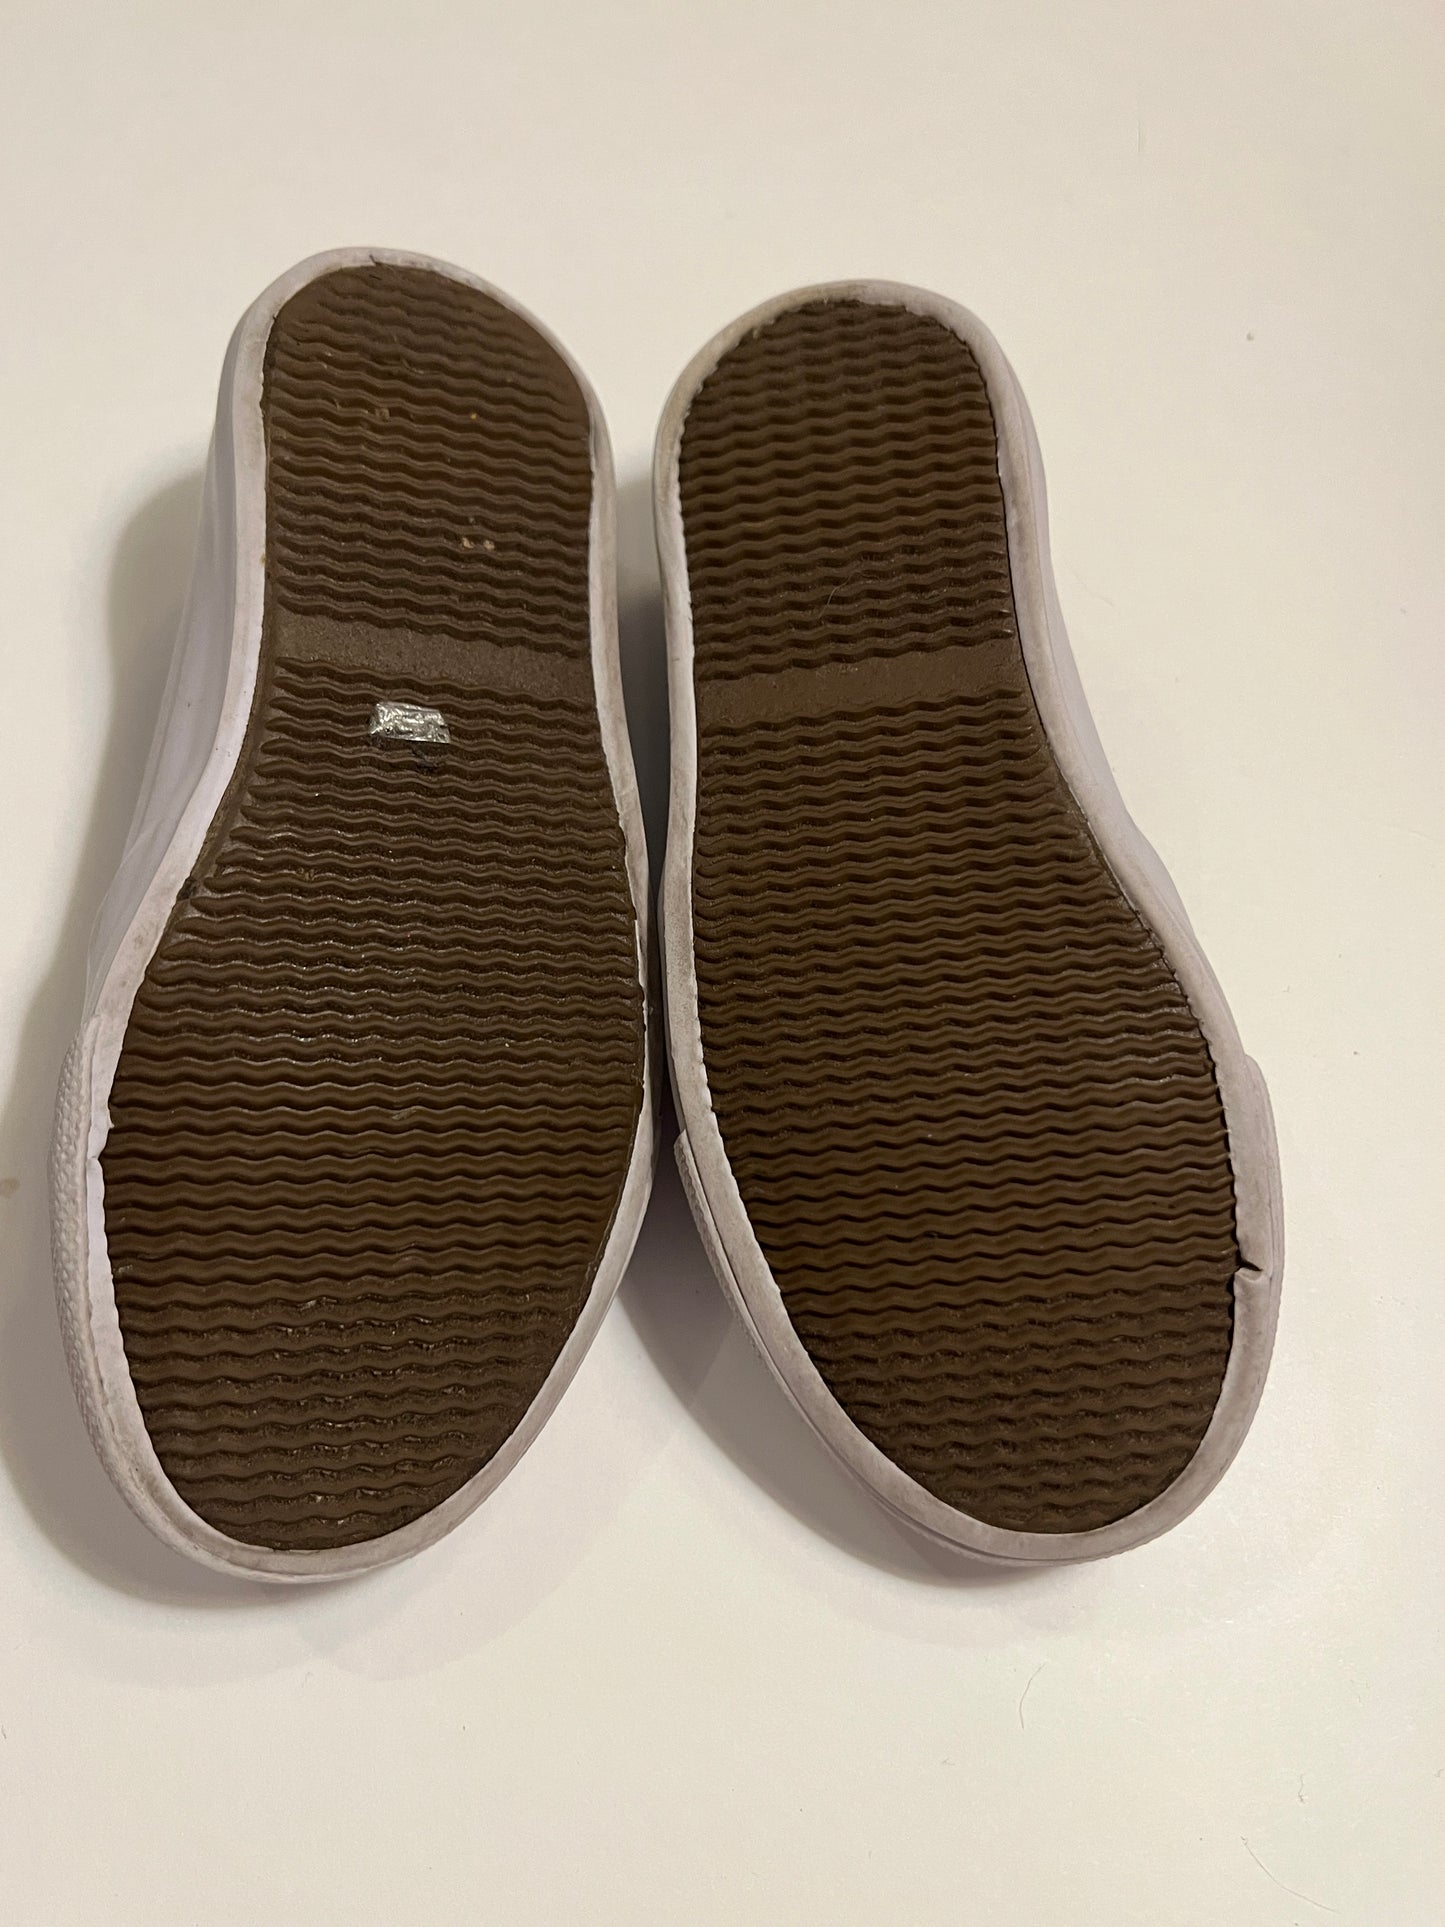 Girls Shoe Size 7/8 Lily & Dan Green Camo Loafer